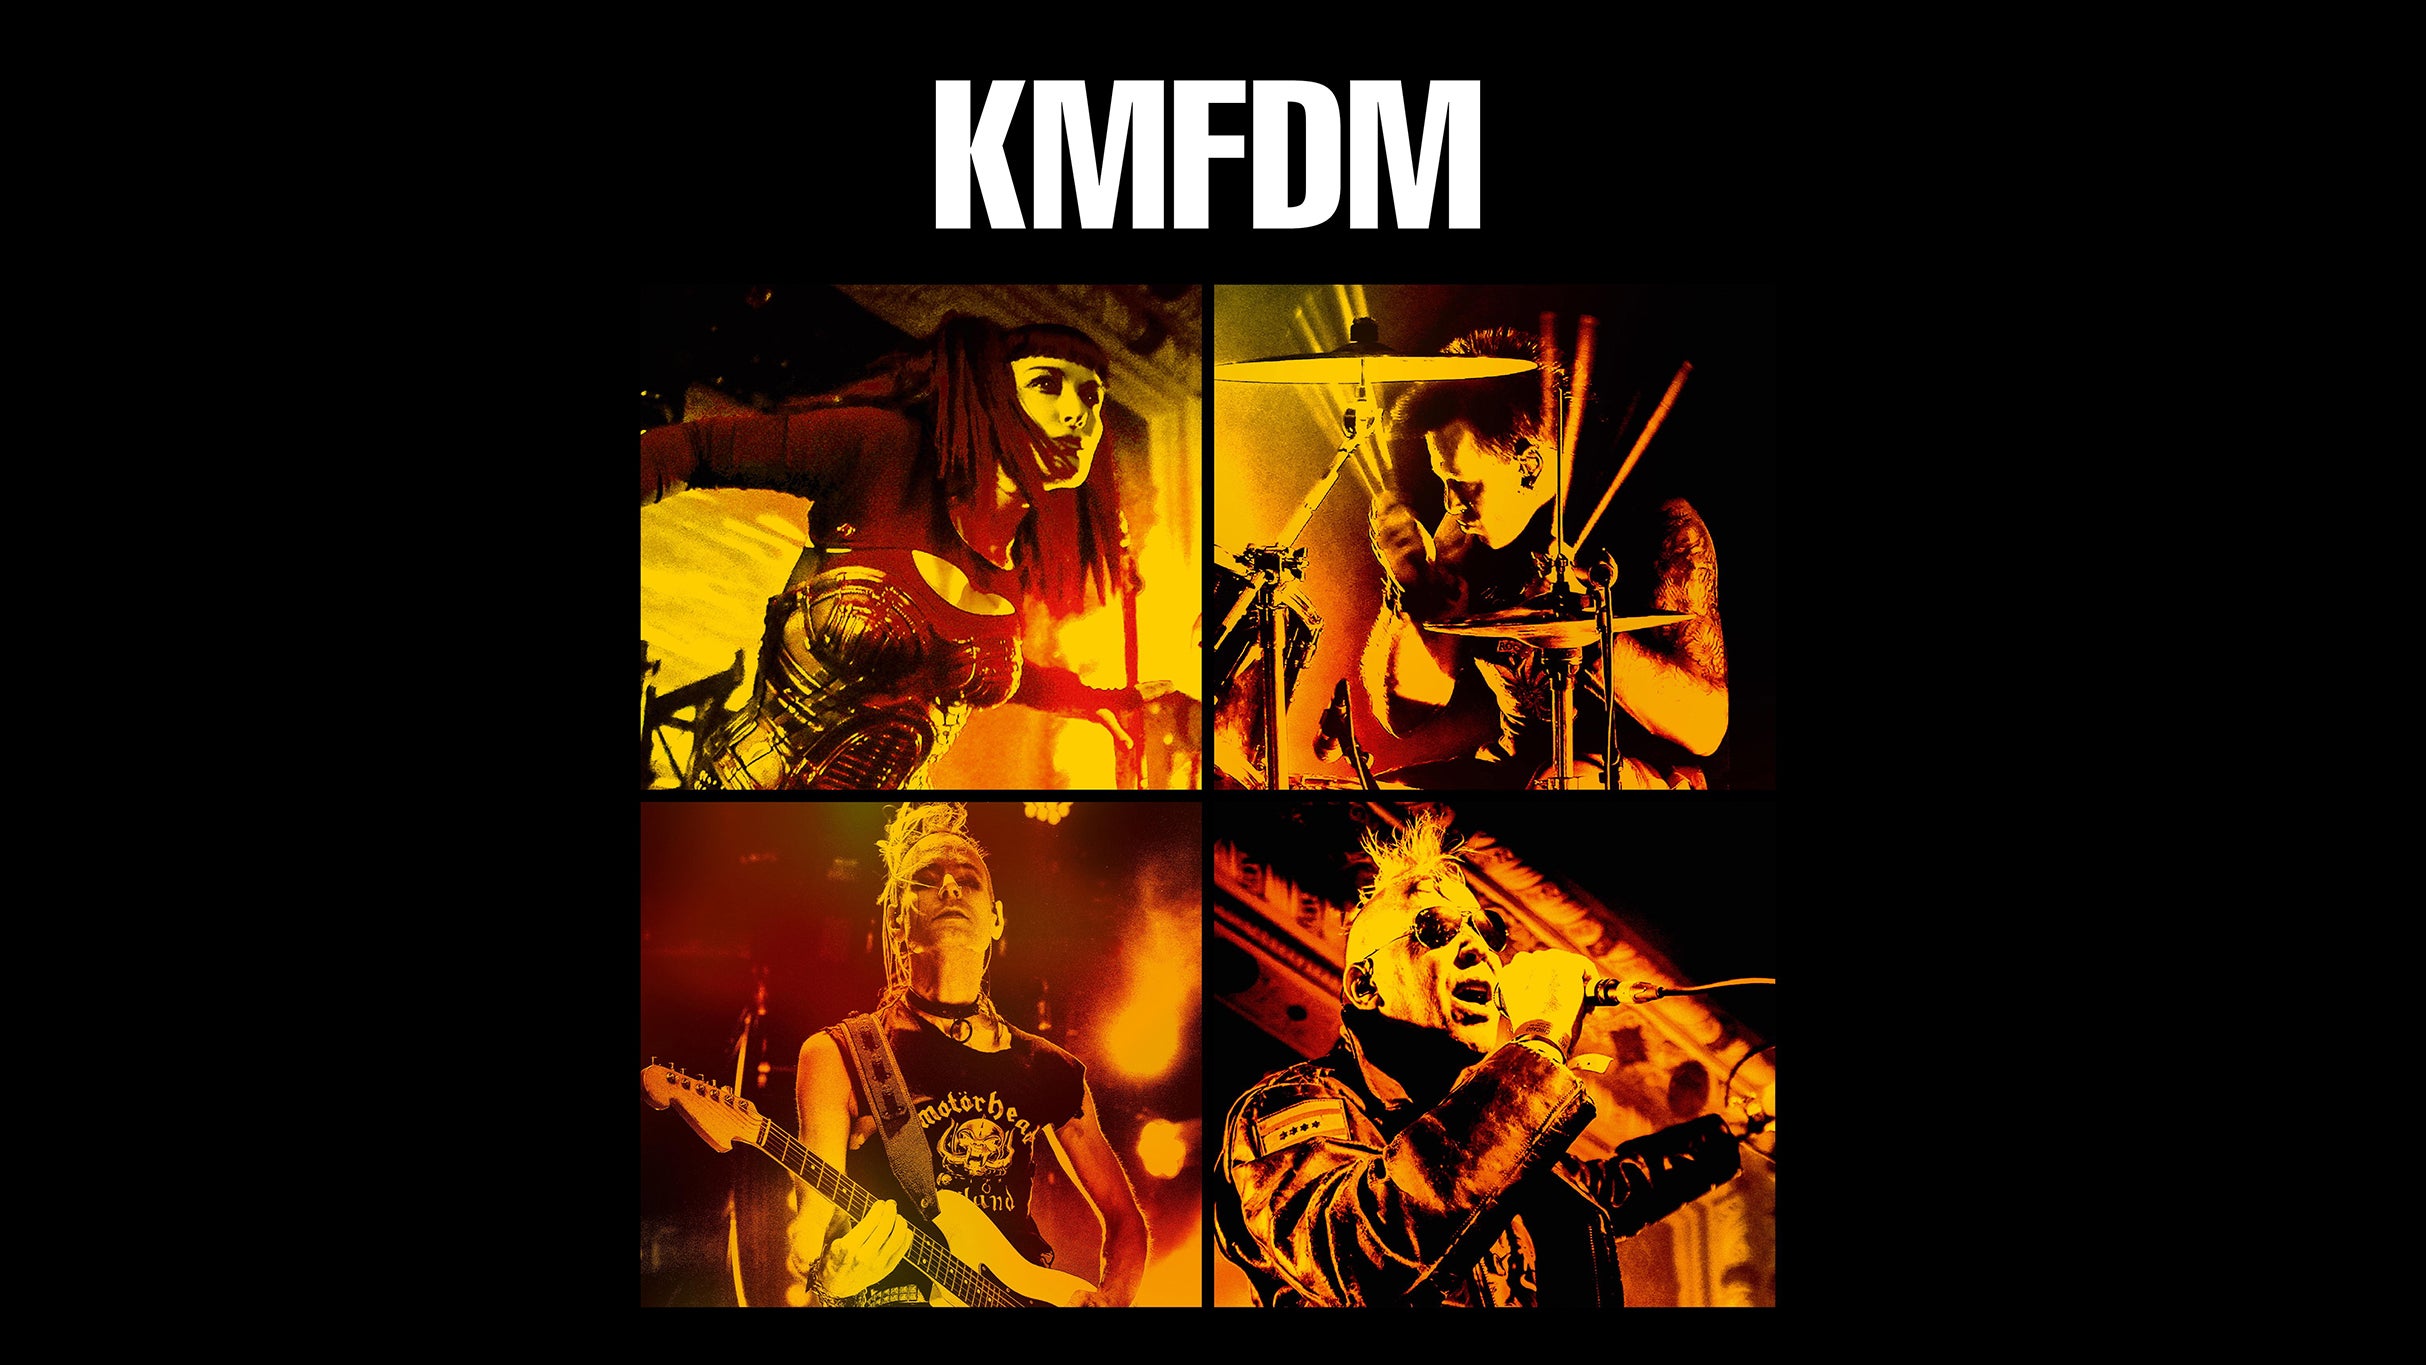 KMFDM in Los Angeles promo photo for Live Nation presale offer code